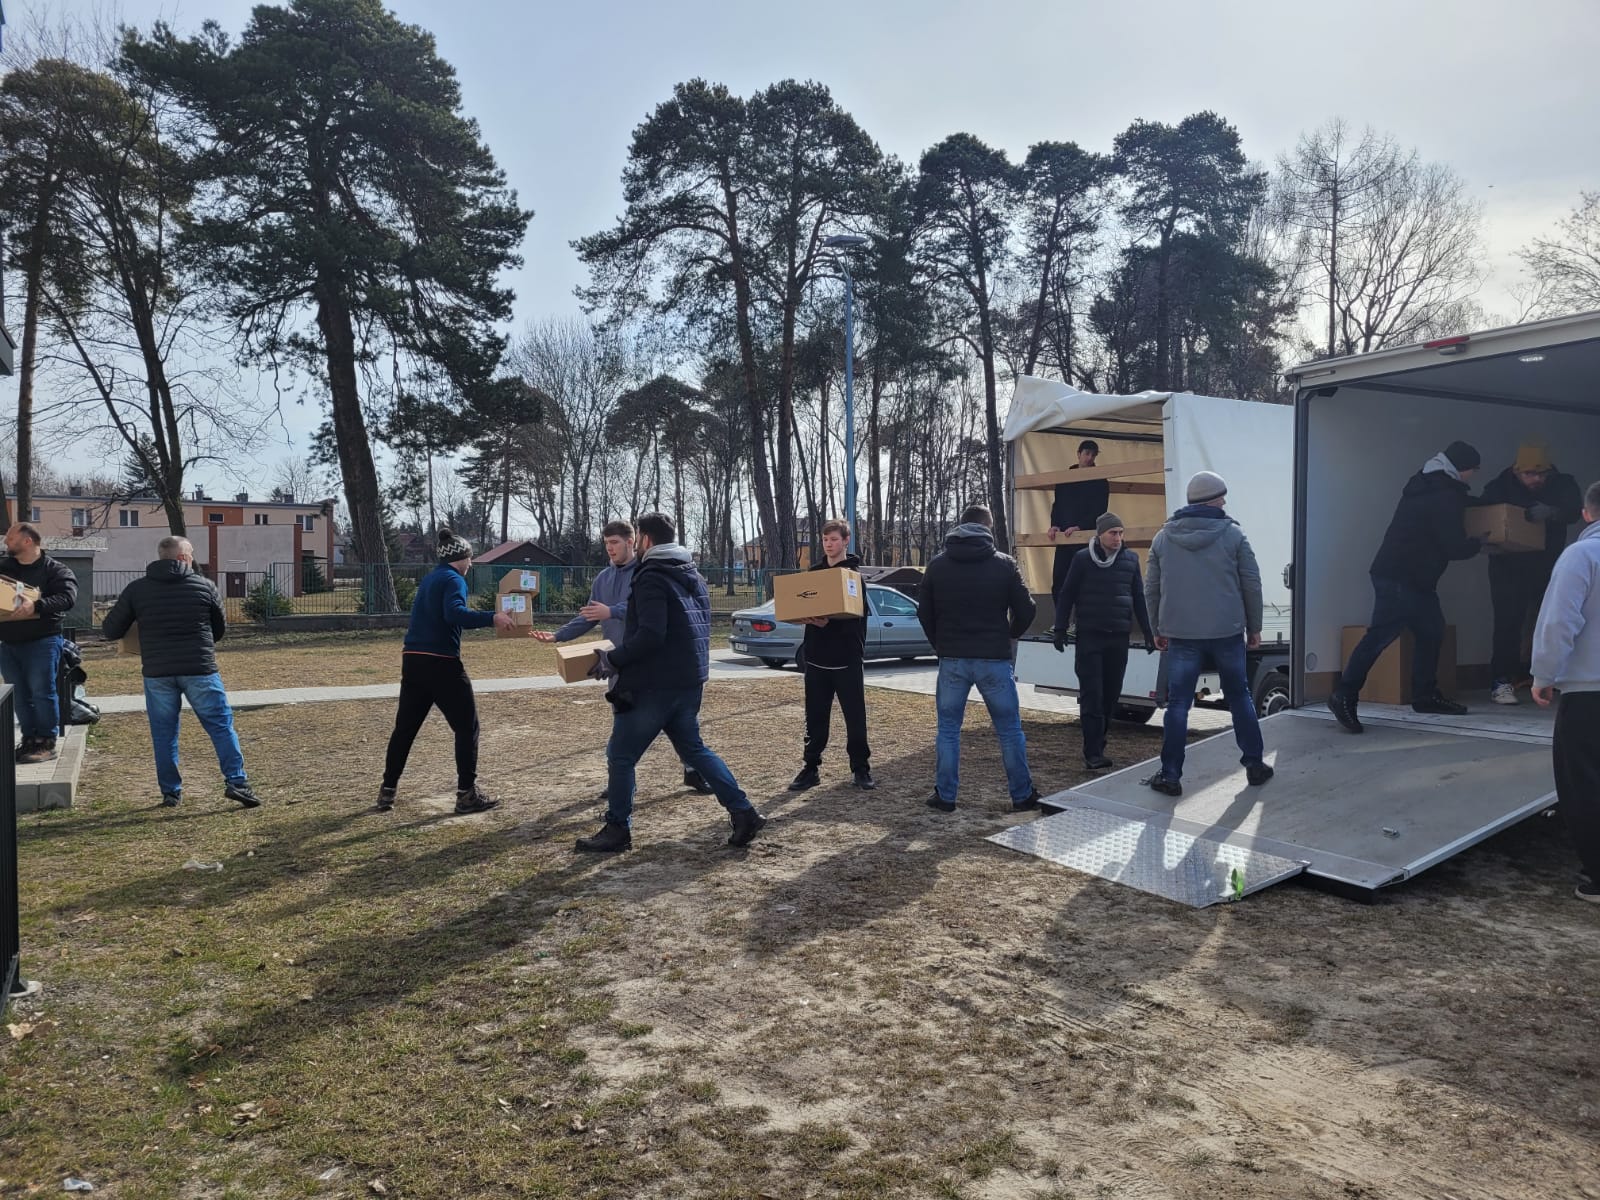 Volunteers delivering supplies to Ukrainian refugees in Poland